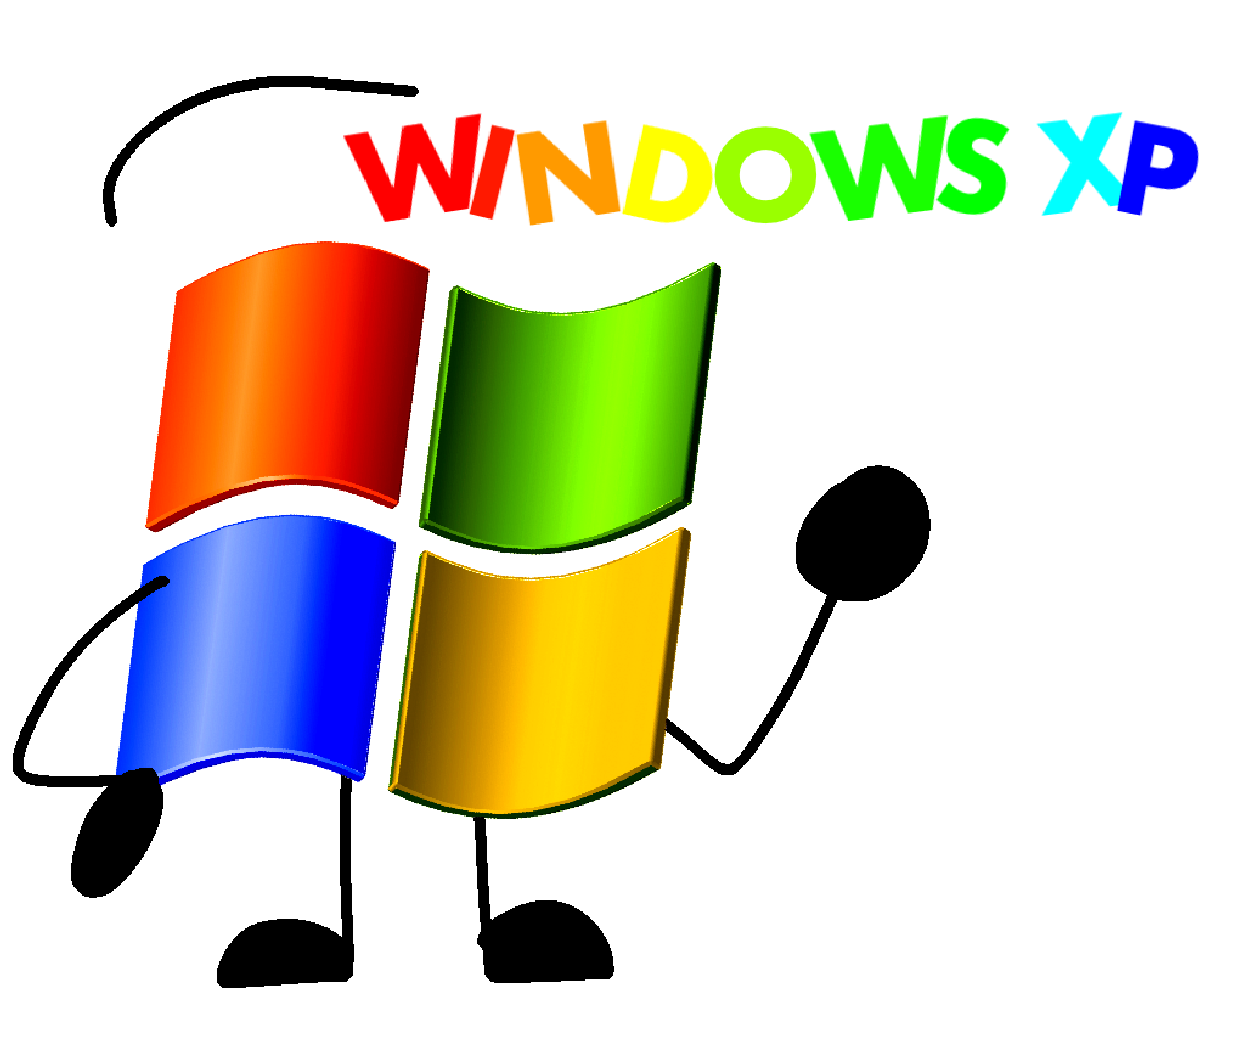 Windows XP Poster by MohamadouWindowsXP10 on DeviantArt